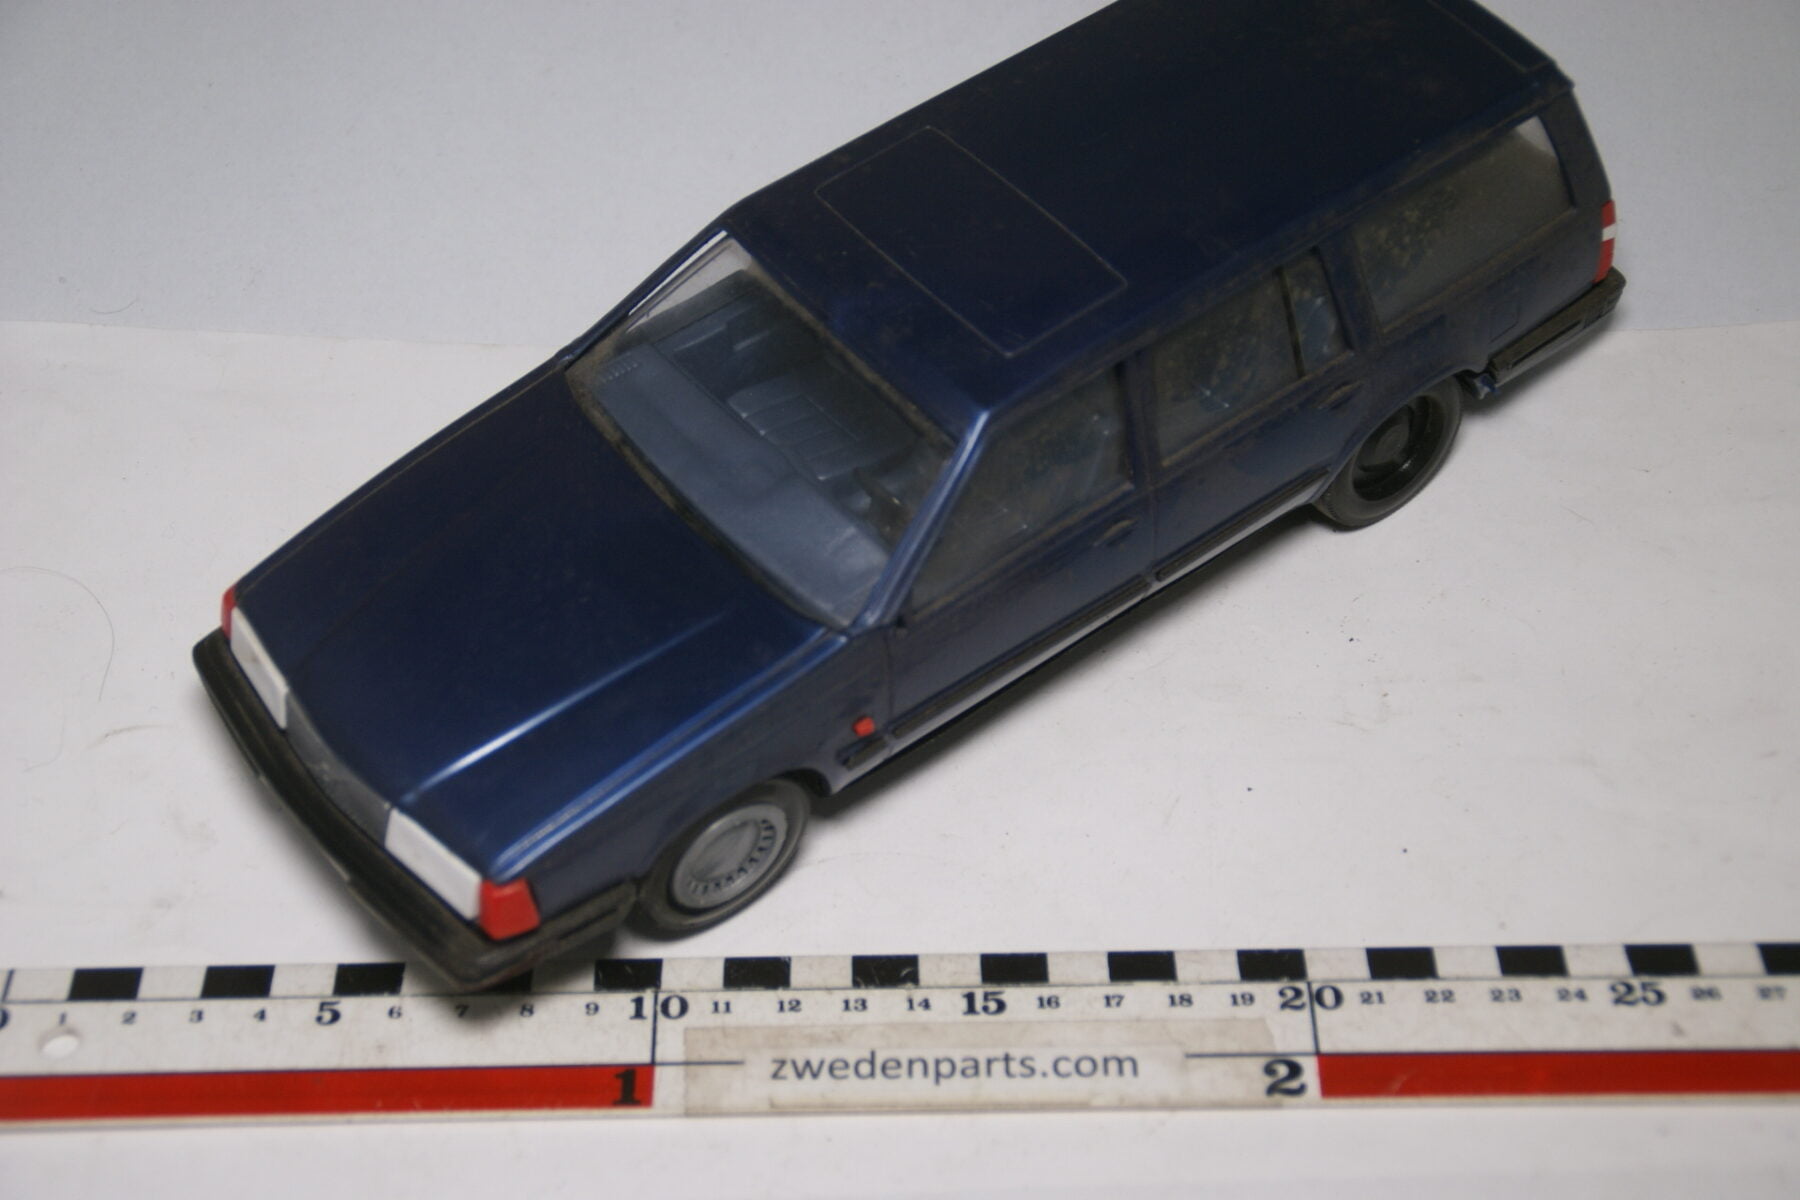 DSC09168 miniatuur Stahlberg Made in Finland Volvo 760GLE blauw m ca 1 op 18